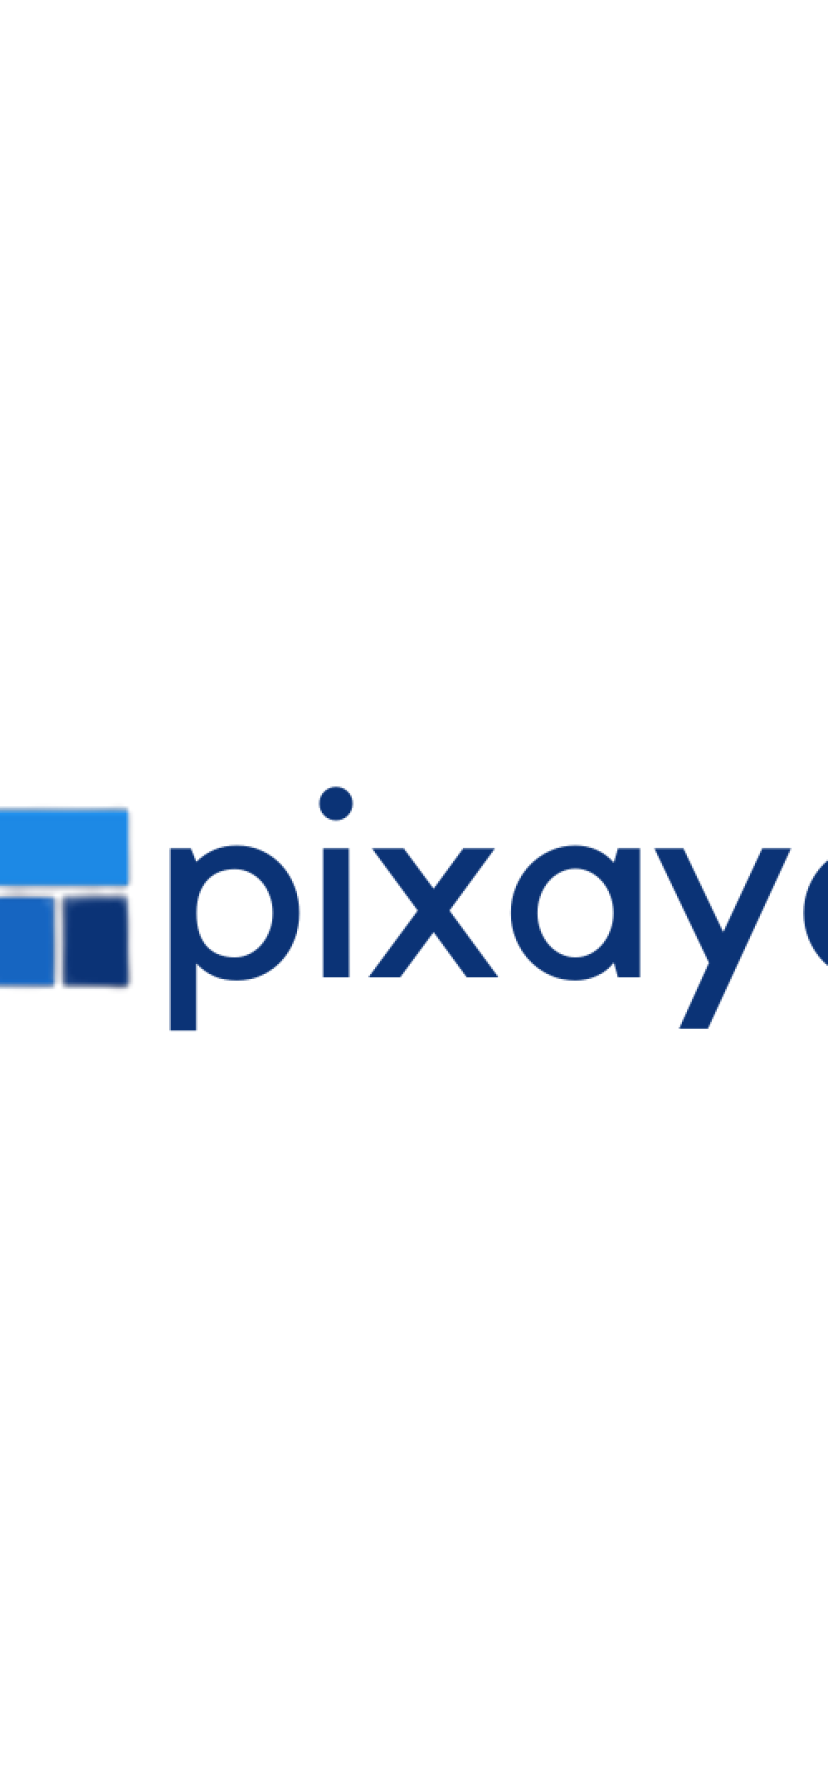 Pixaya.com domain name for sale